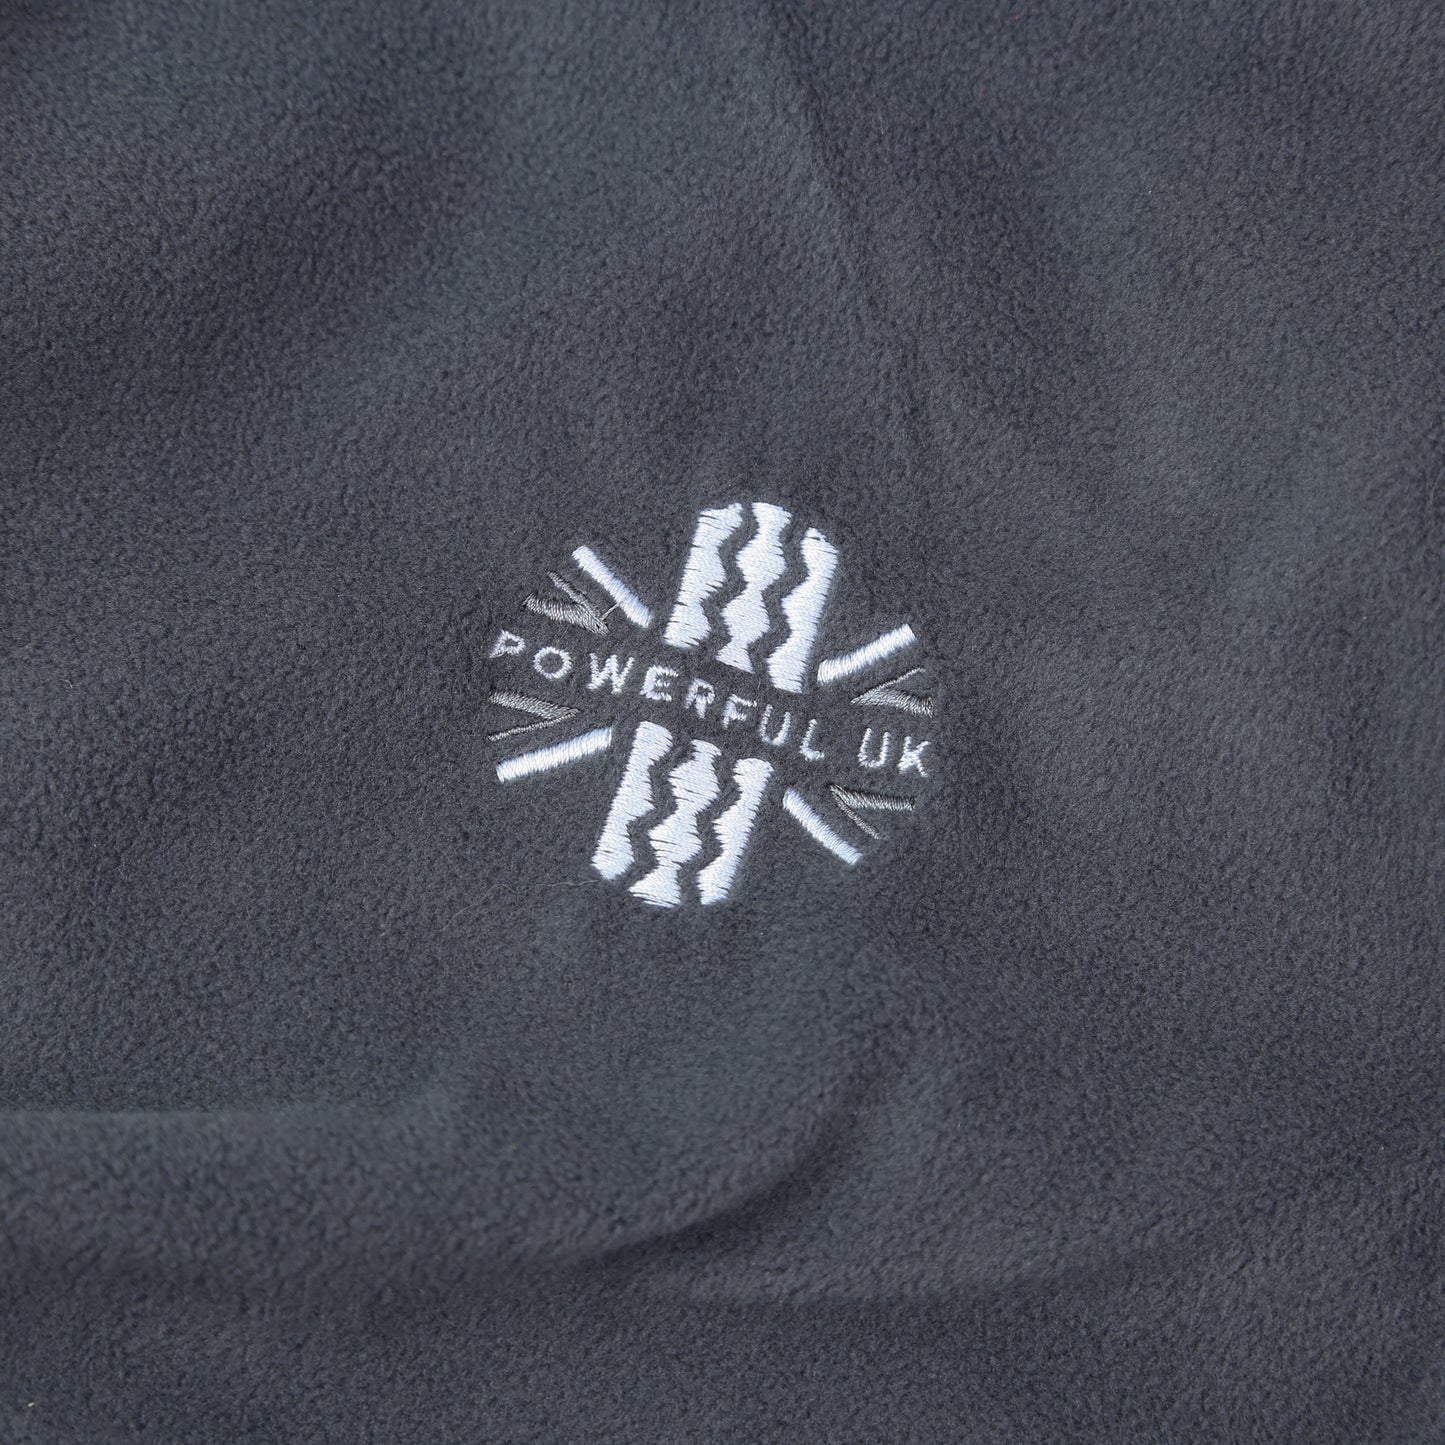 Embroidered Fleece Powerful UK Ltd "Merch" - Seal Grey - XL